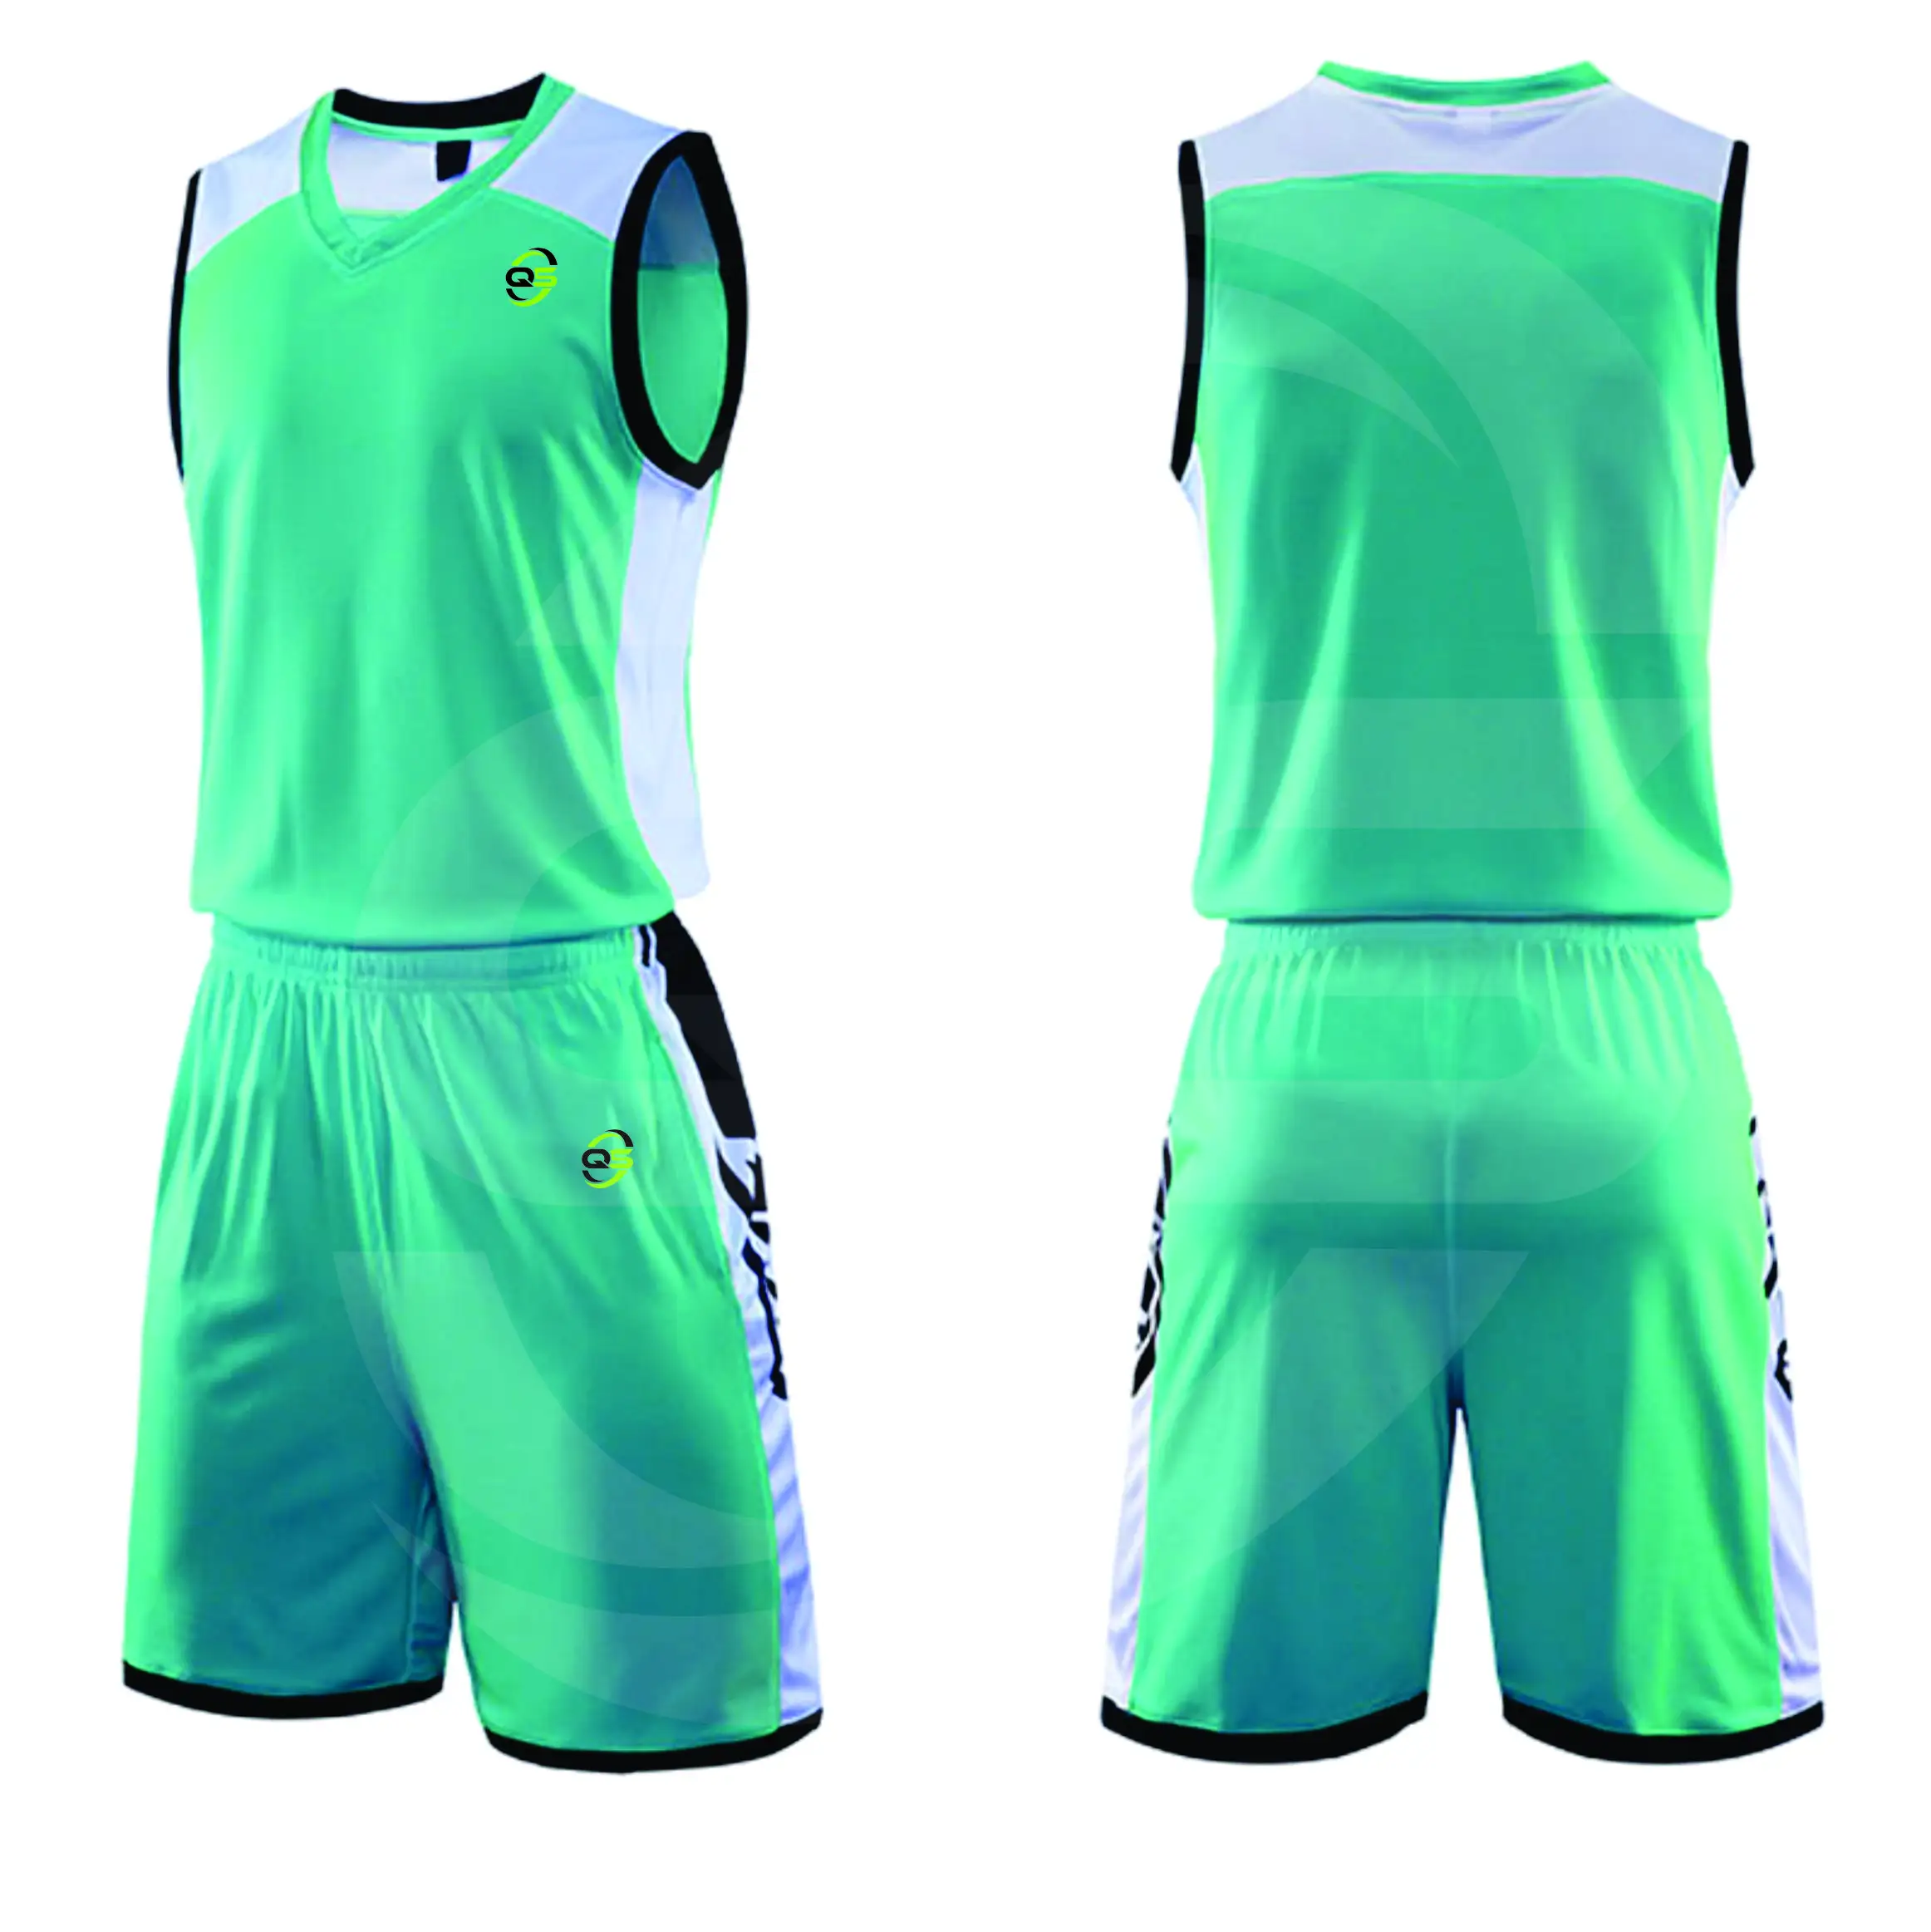 Latest European sizes custom made men mesh sublimation basketball uniform